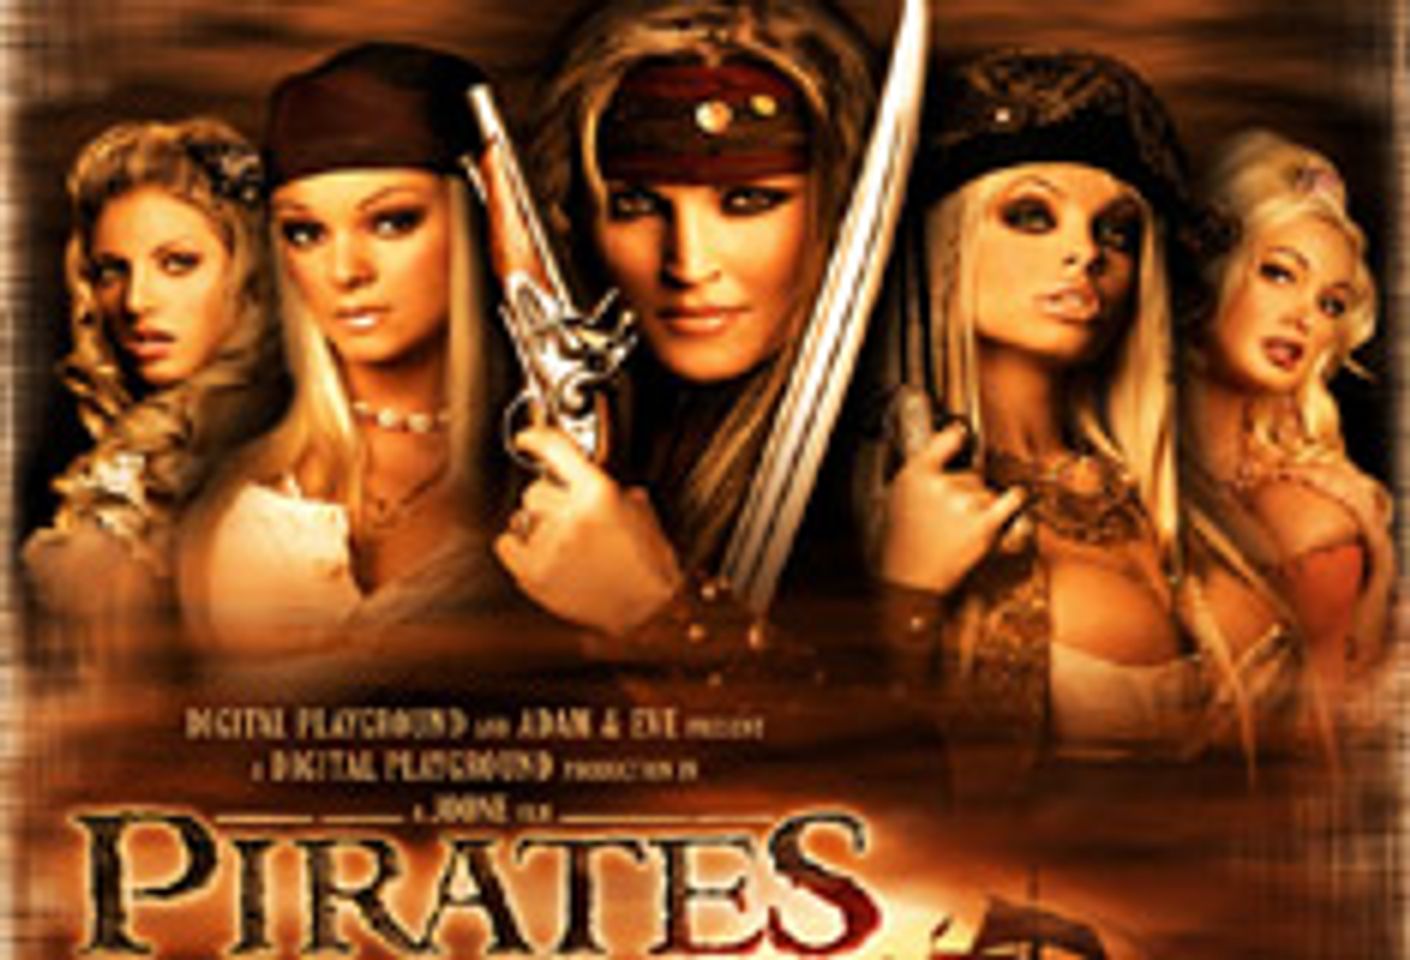 Digital Playground to Debut <i>Pirates</i> Teaser at VSDA